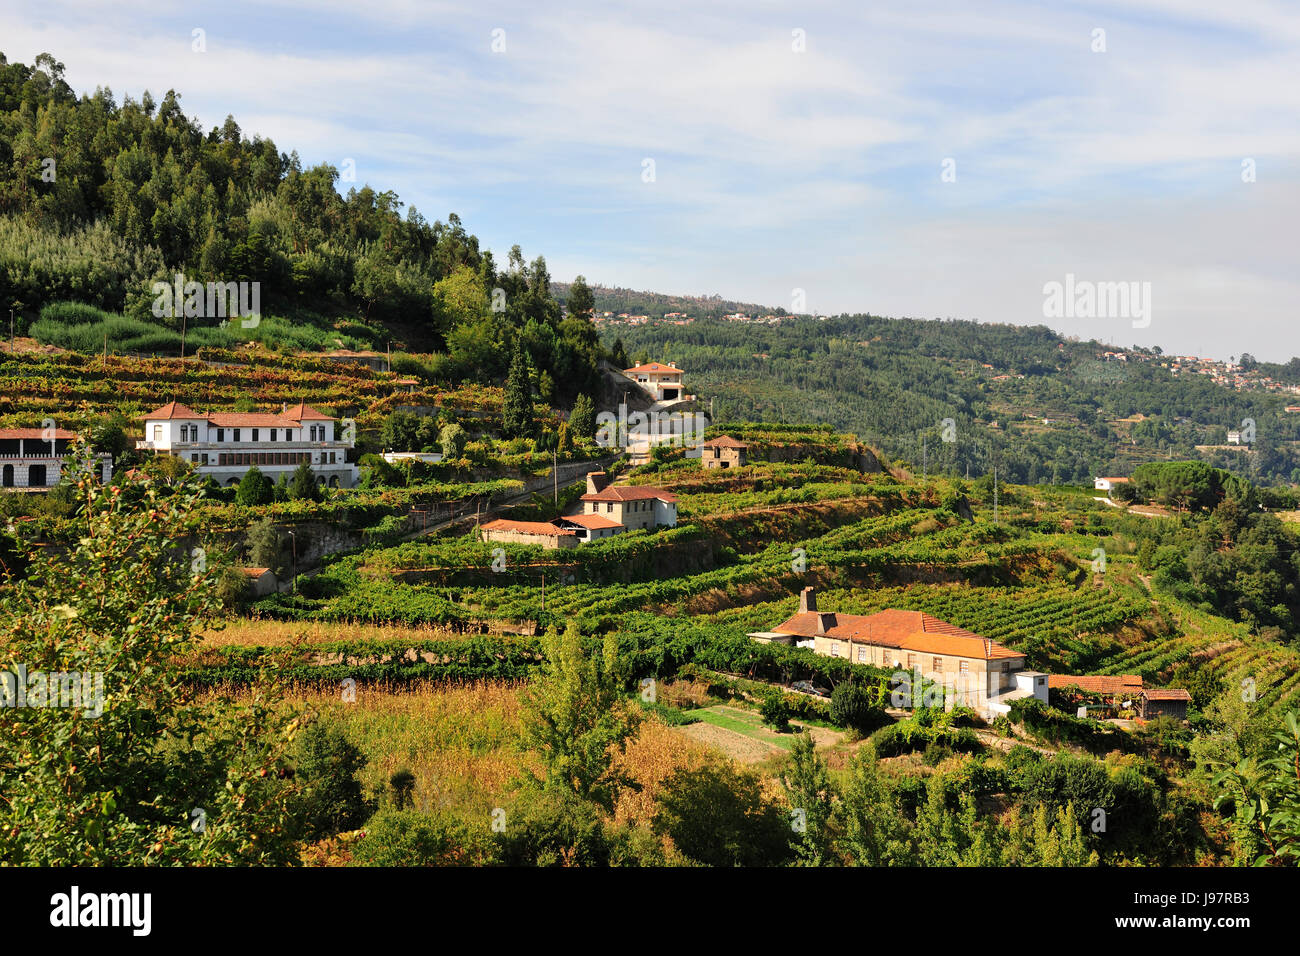 Vineyards at Sardoura, Castelo de Paiva. Douro region, Portugal Stock Photo